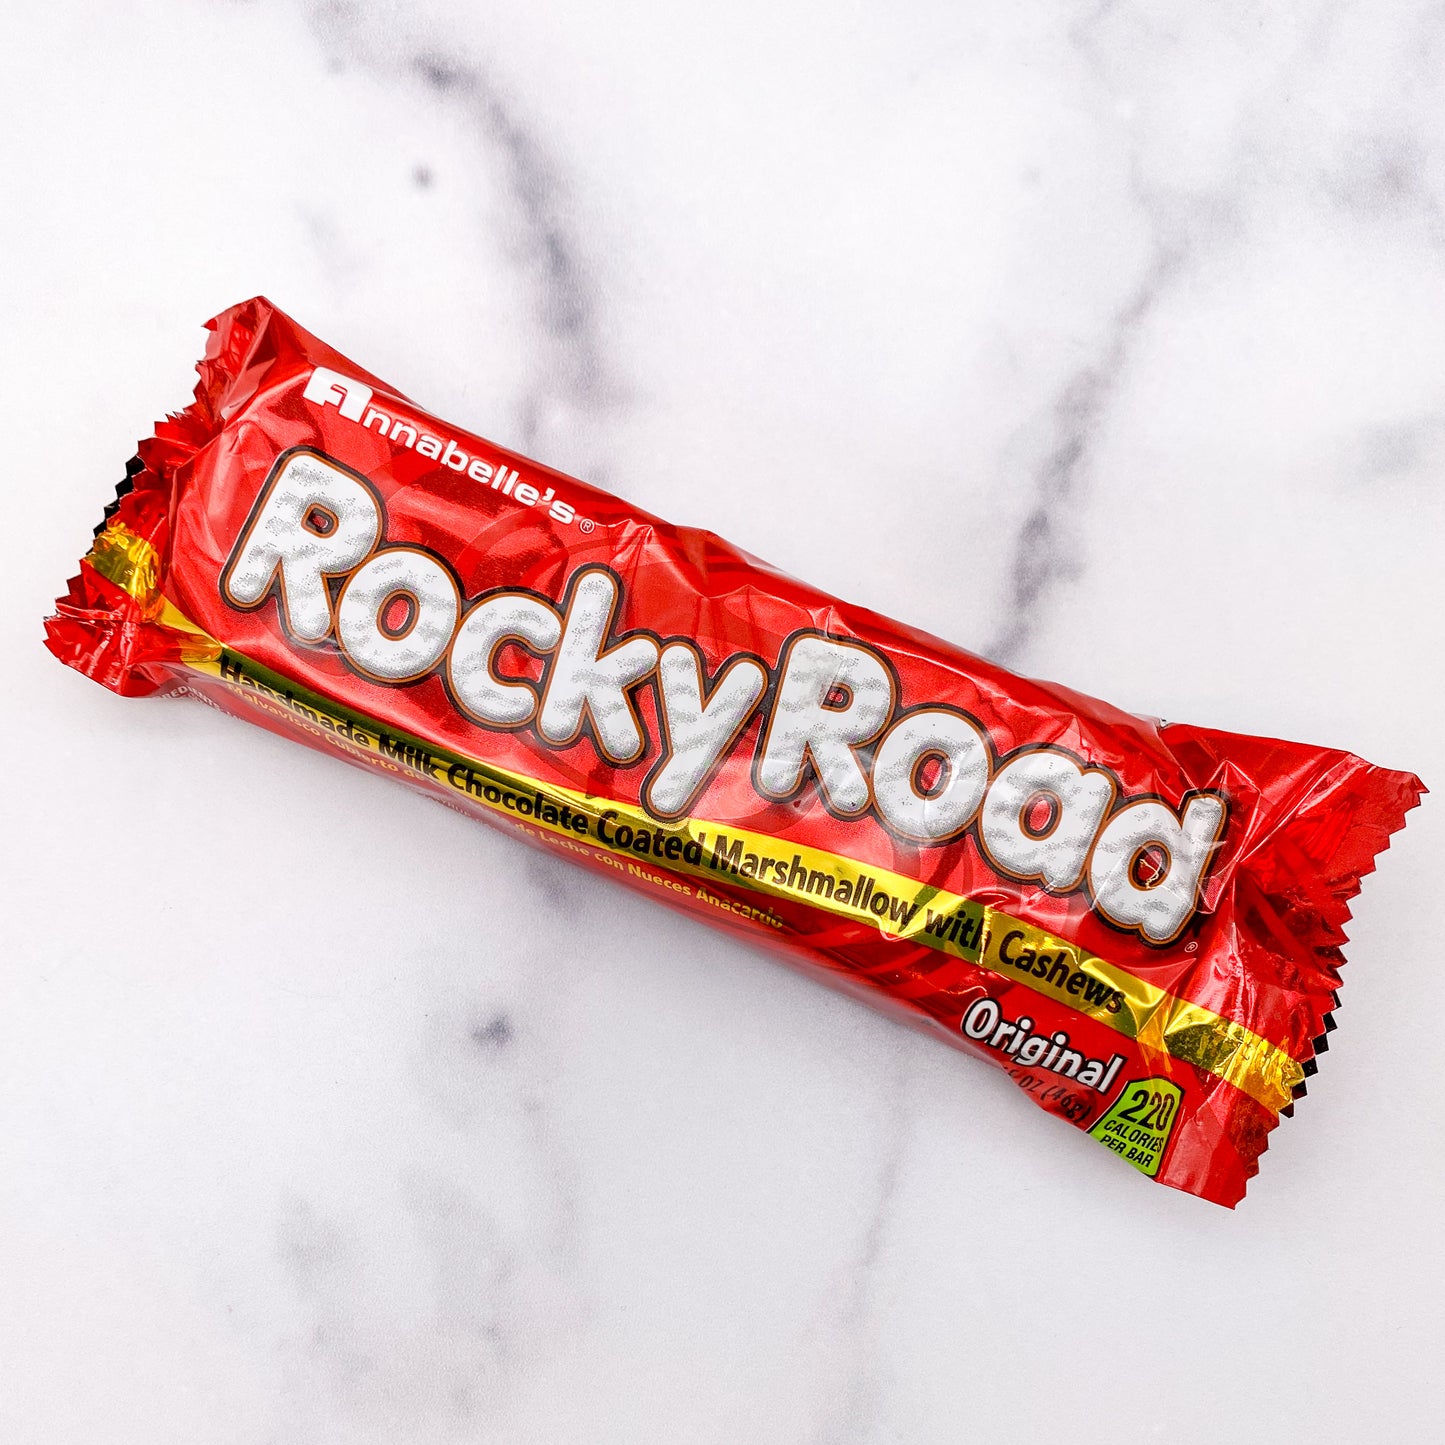 Rocky Road Bar - Original